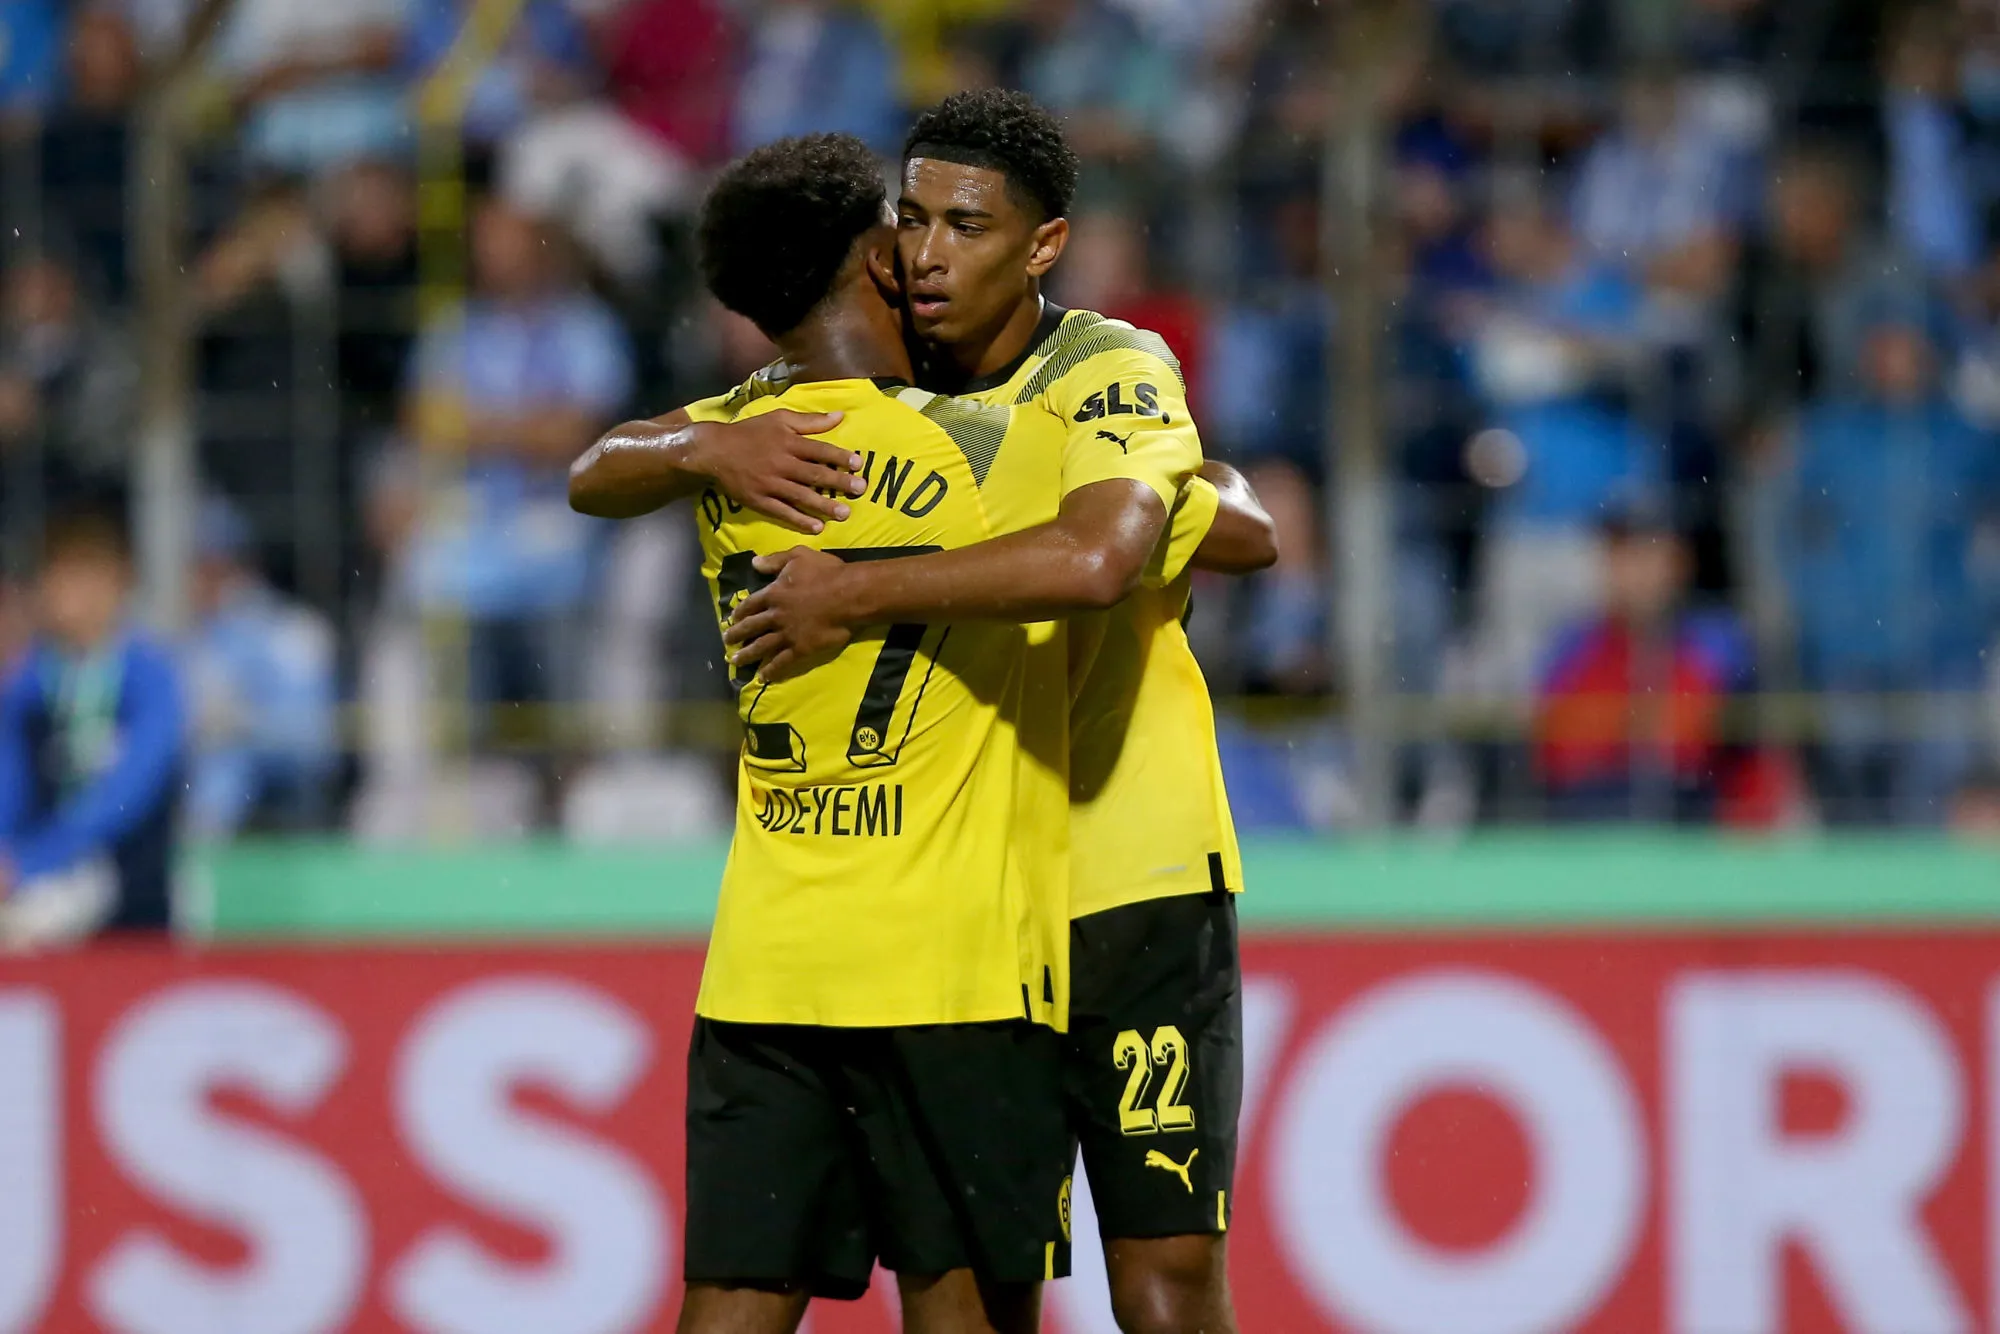 Pronostic Borussia Dortmund Bayer Leverkusen : Analyse, cotes et prono du match de Bundesliga